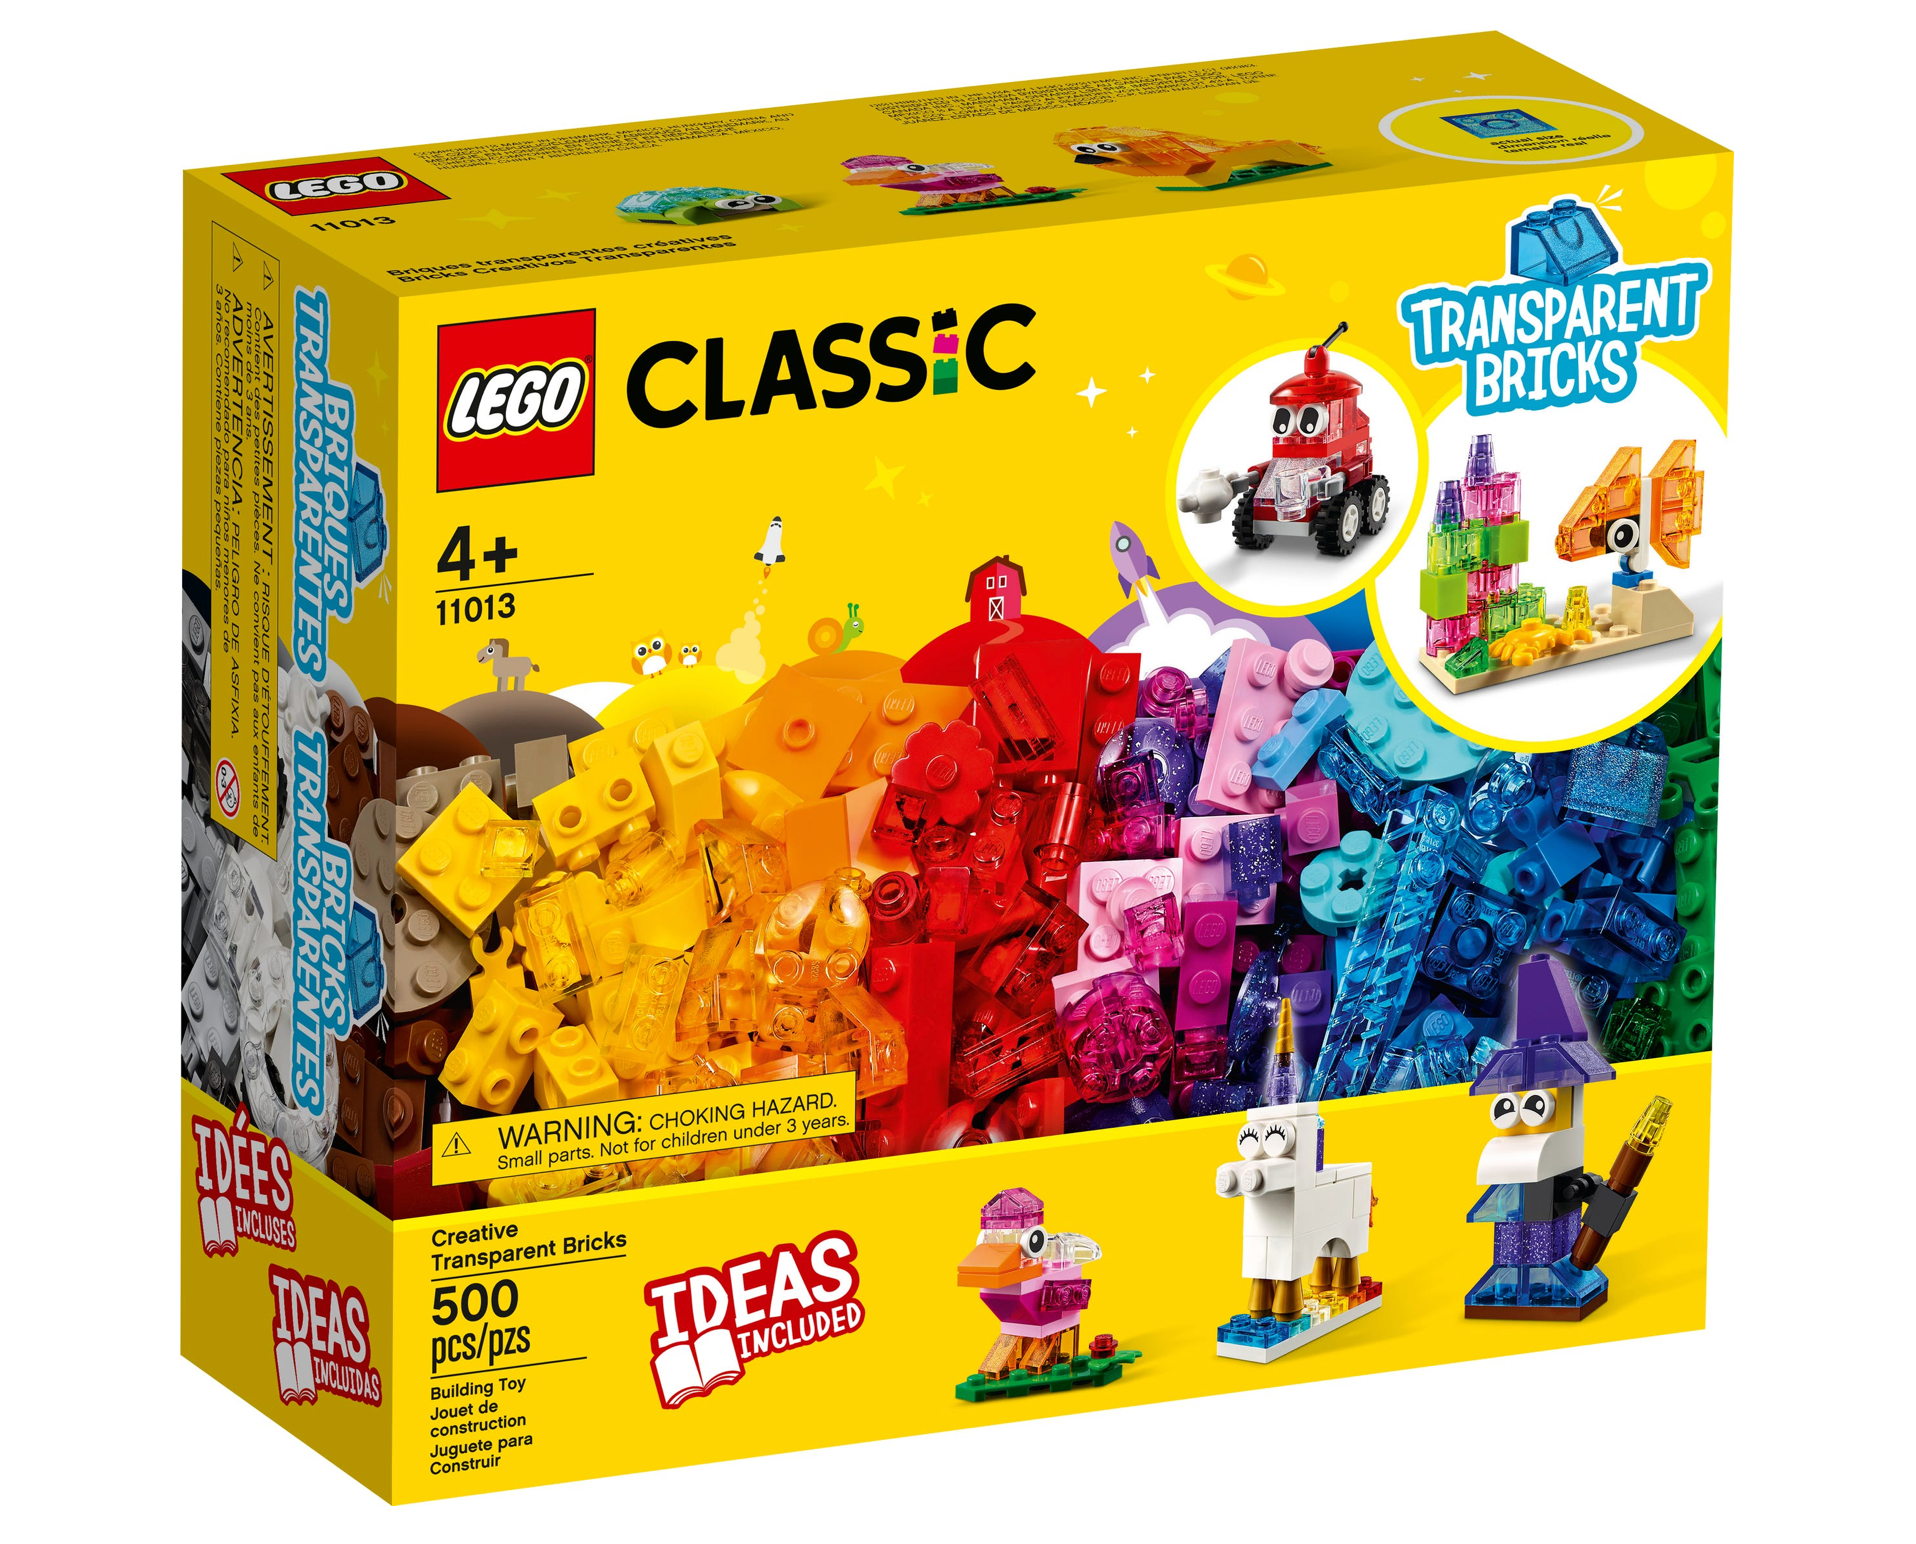 LEGO: Classic - Creative Transparent Bricks